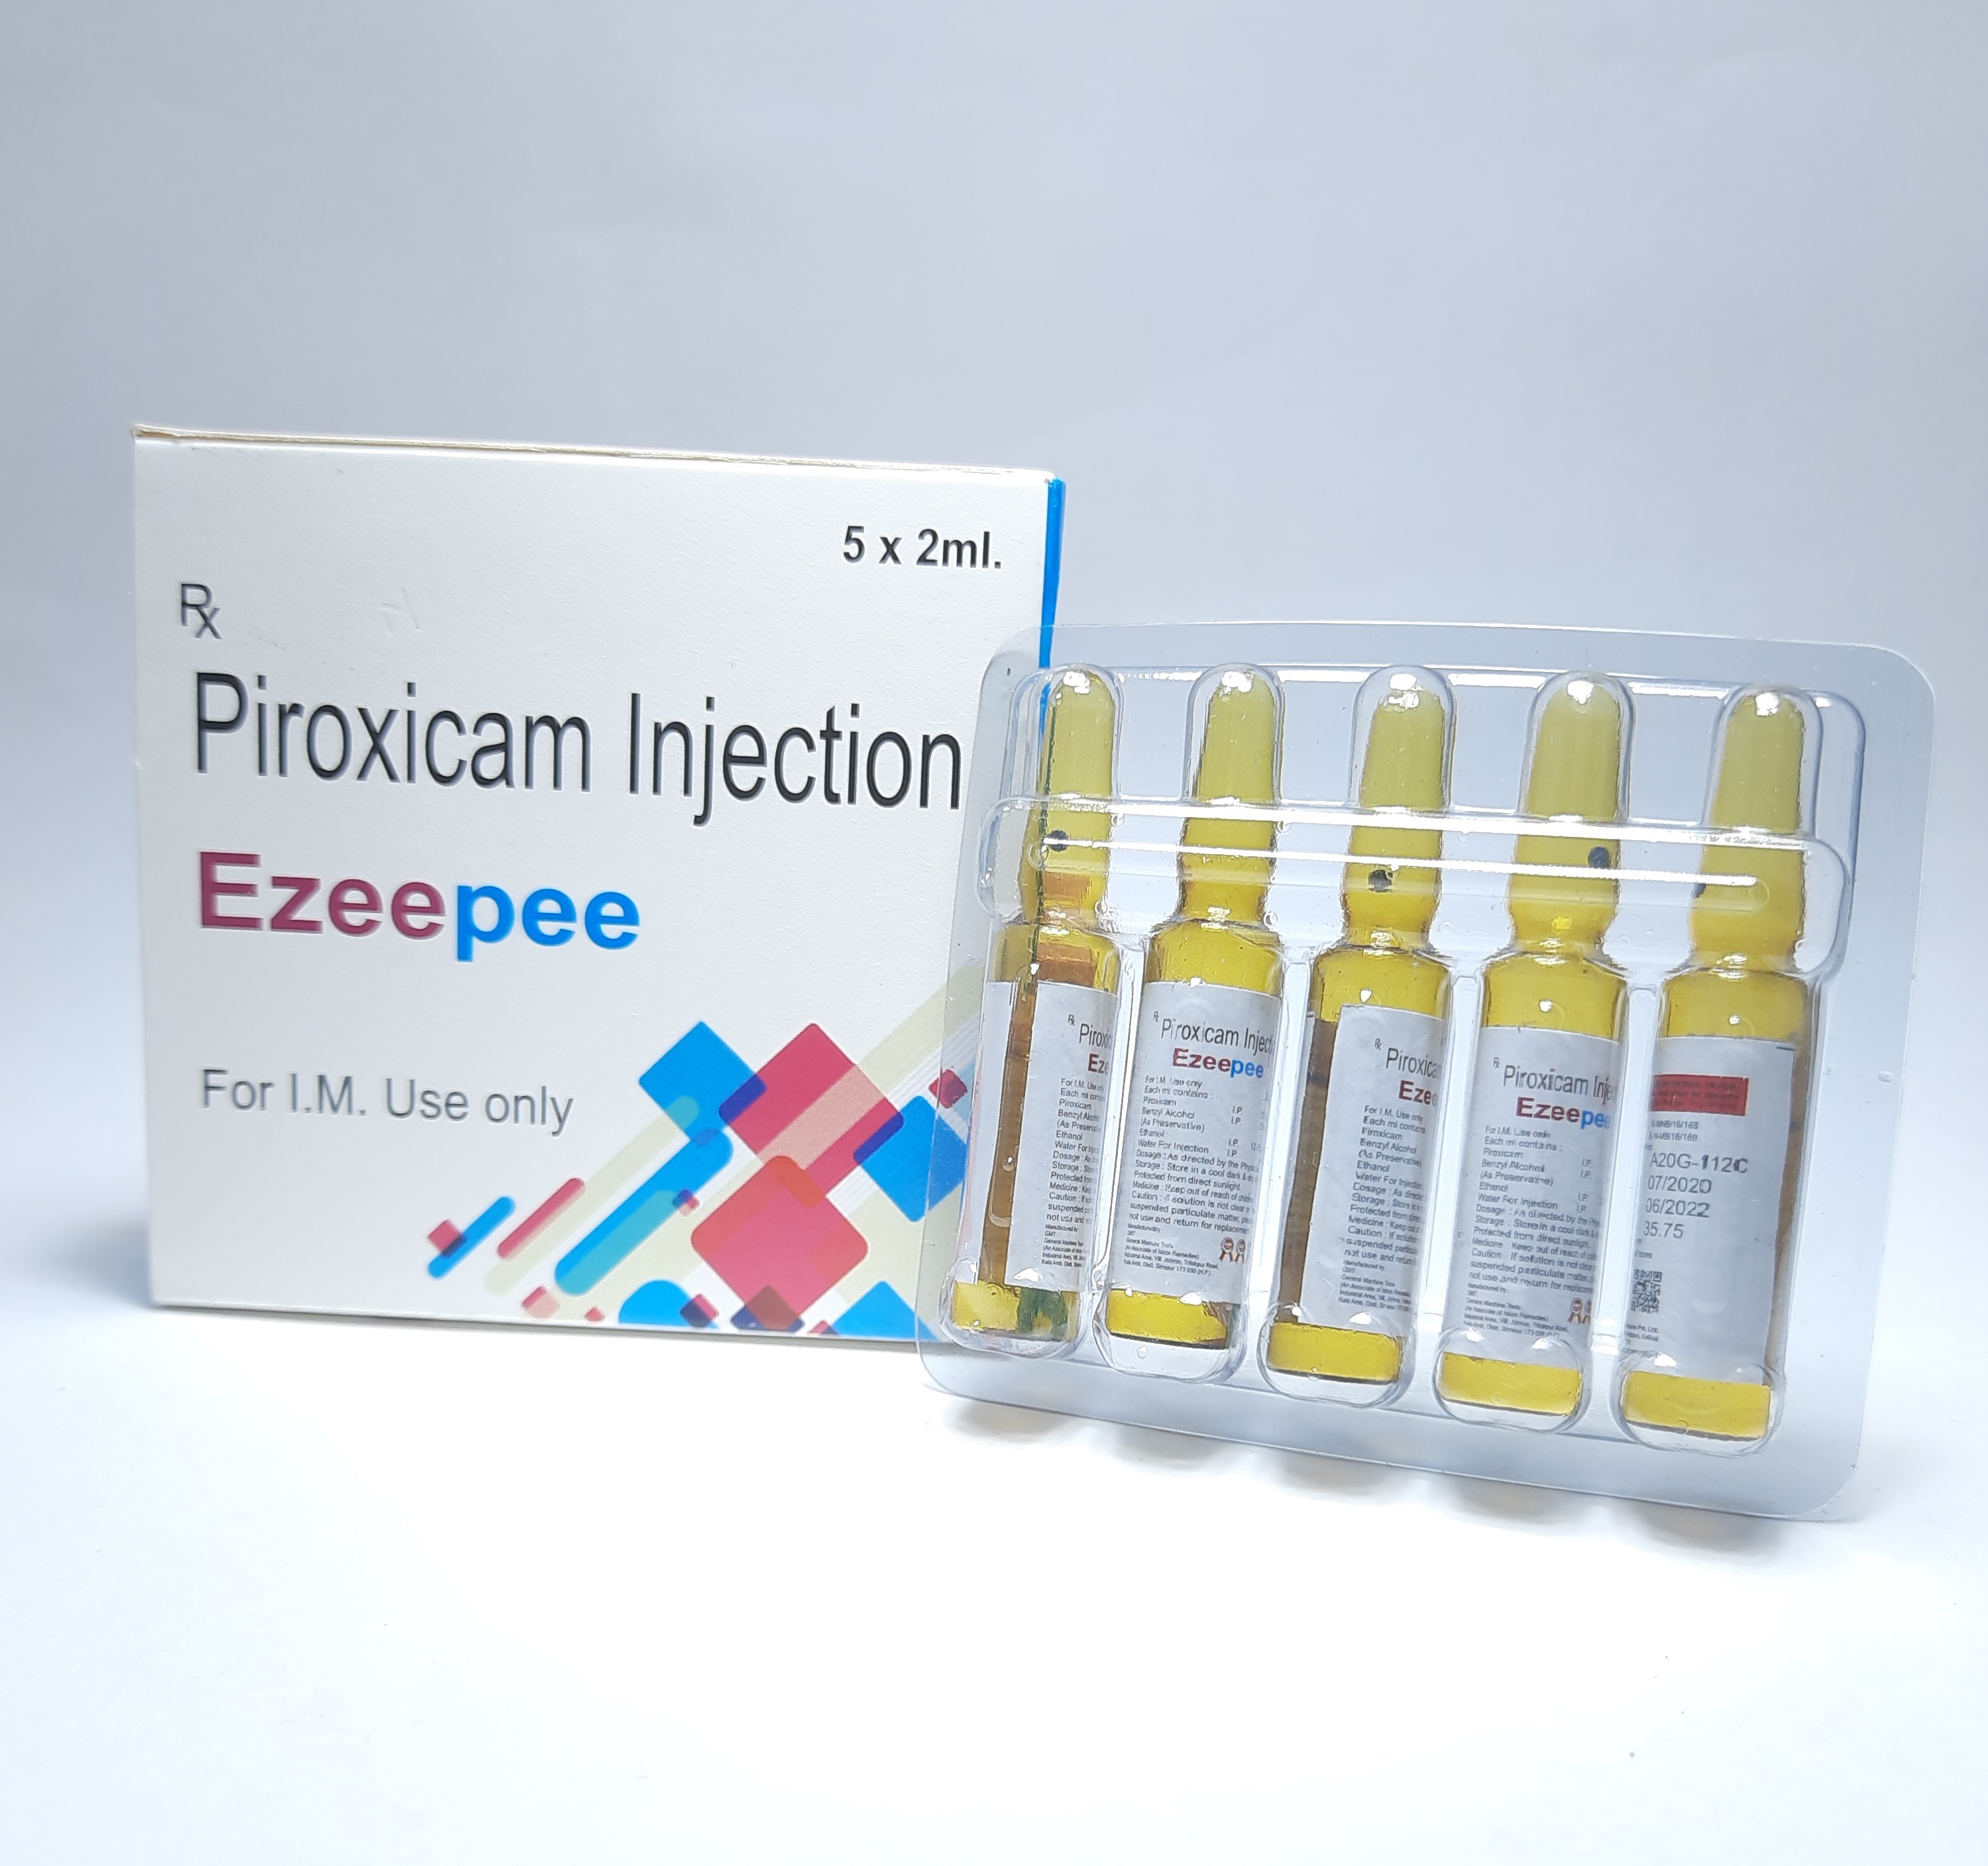 Ezeepee injection